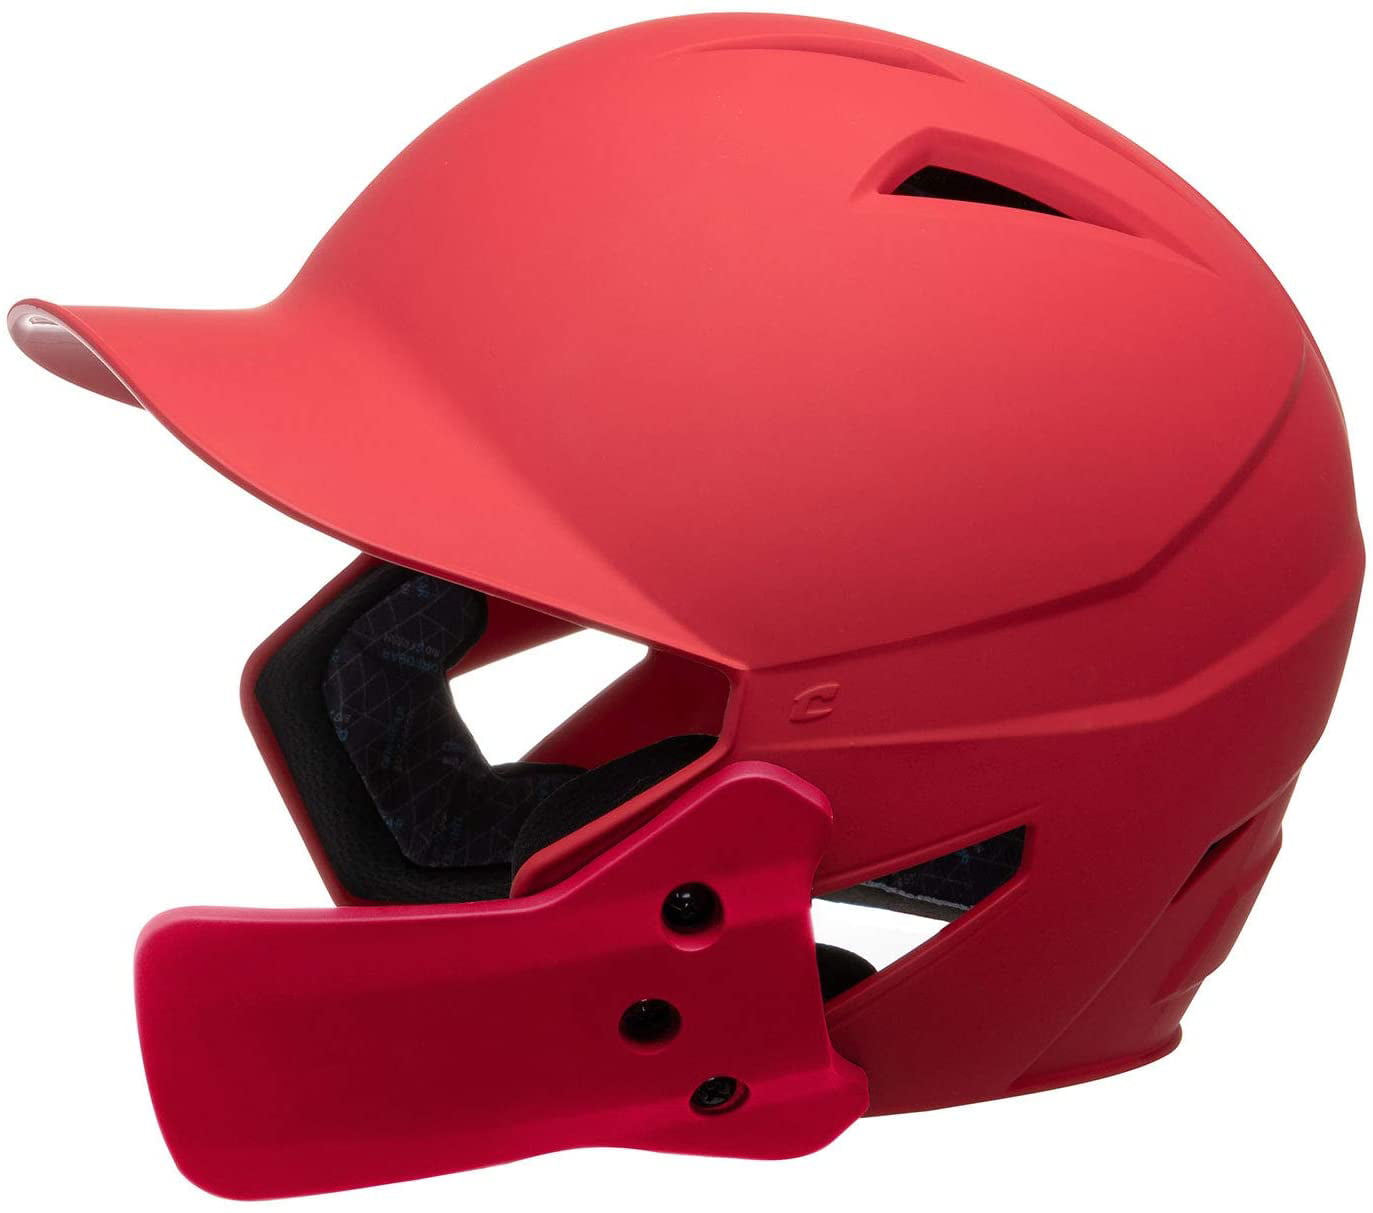 Champro Hx Gamer Bat Helmet With Jaw Guard 